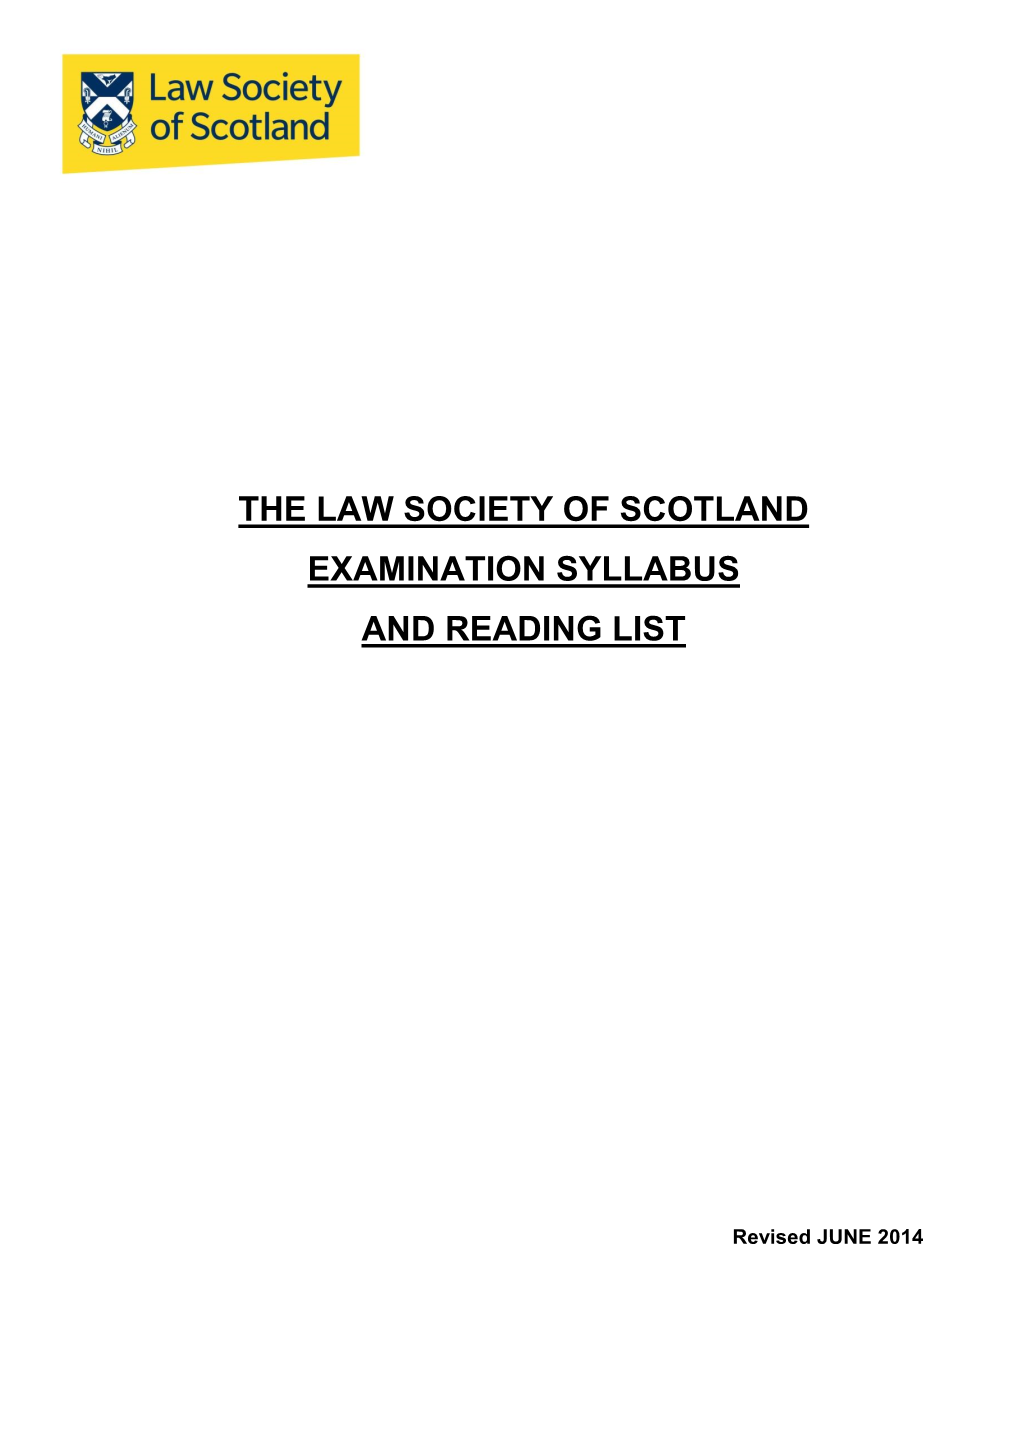 The Law Society of Scotland Examination Syllabus and Reading List